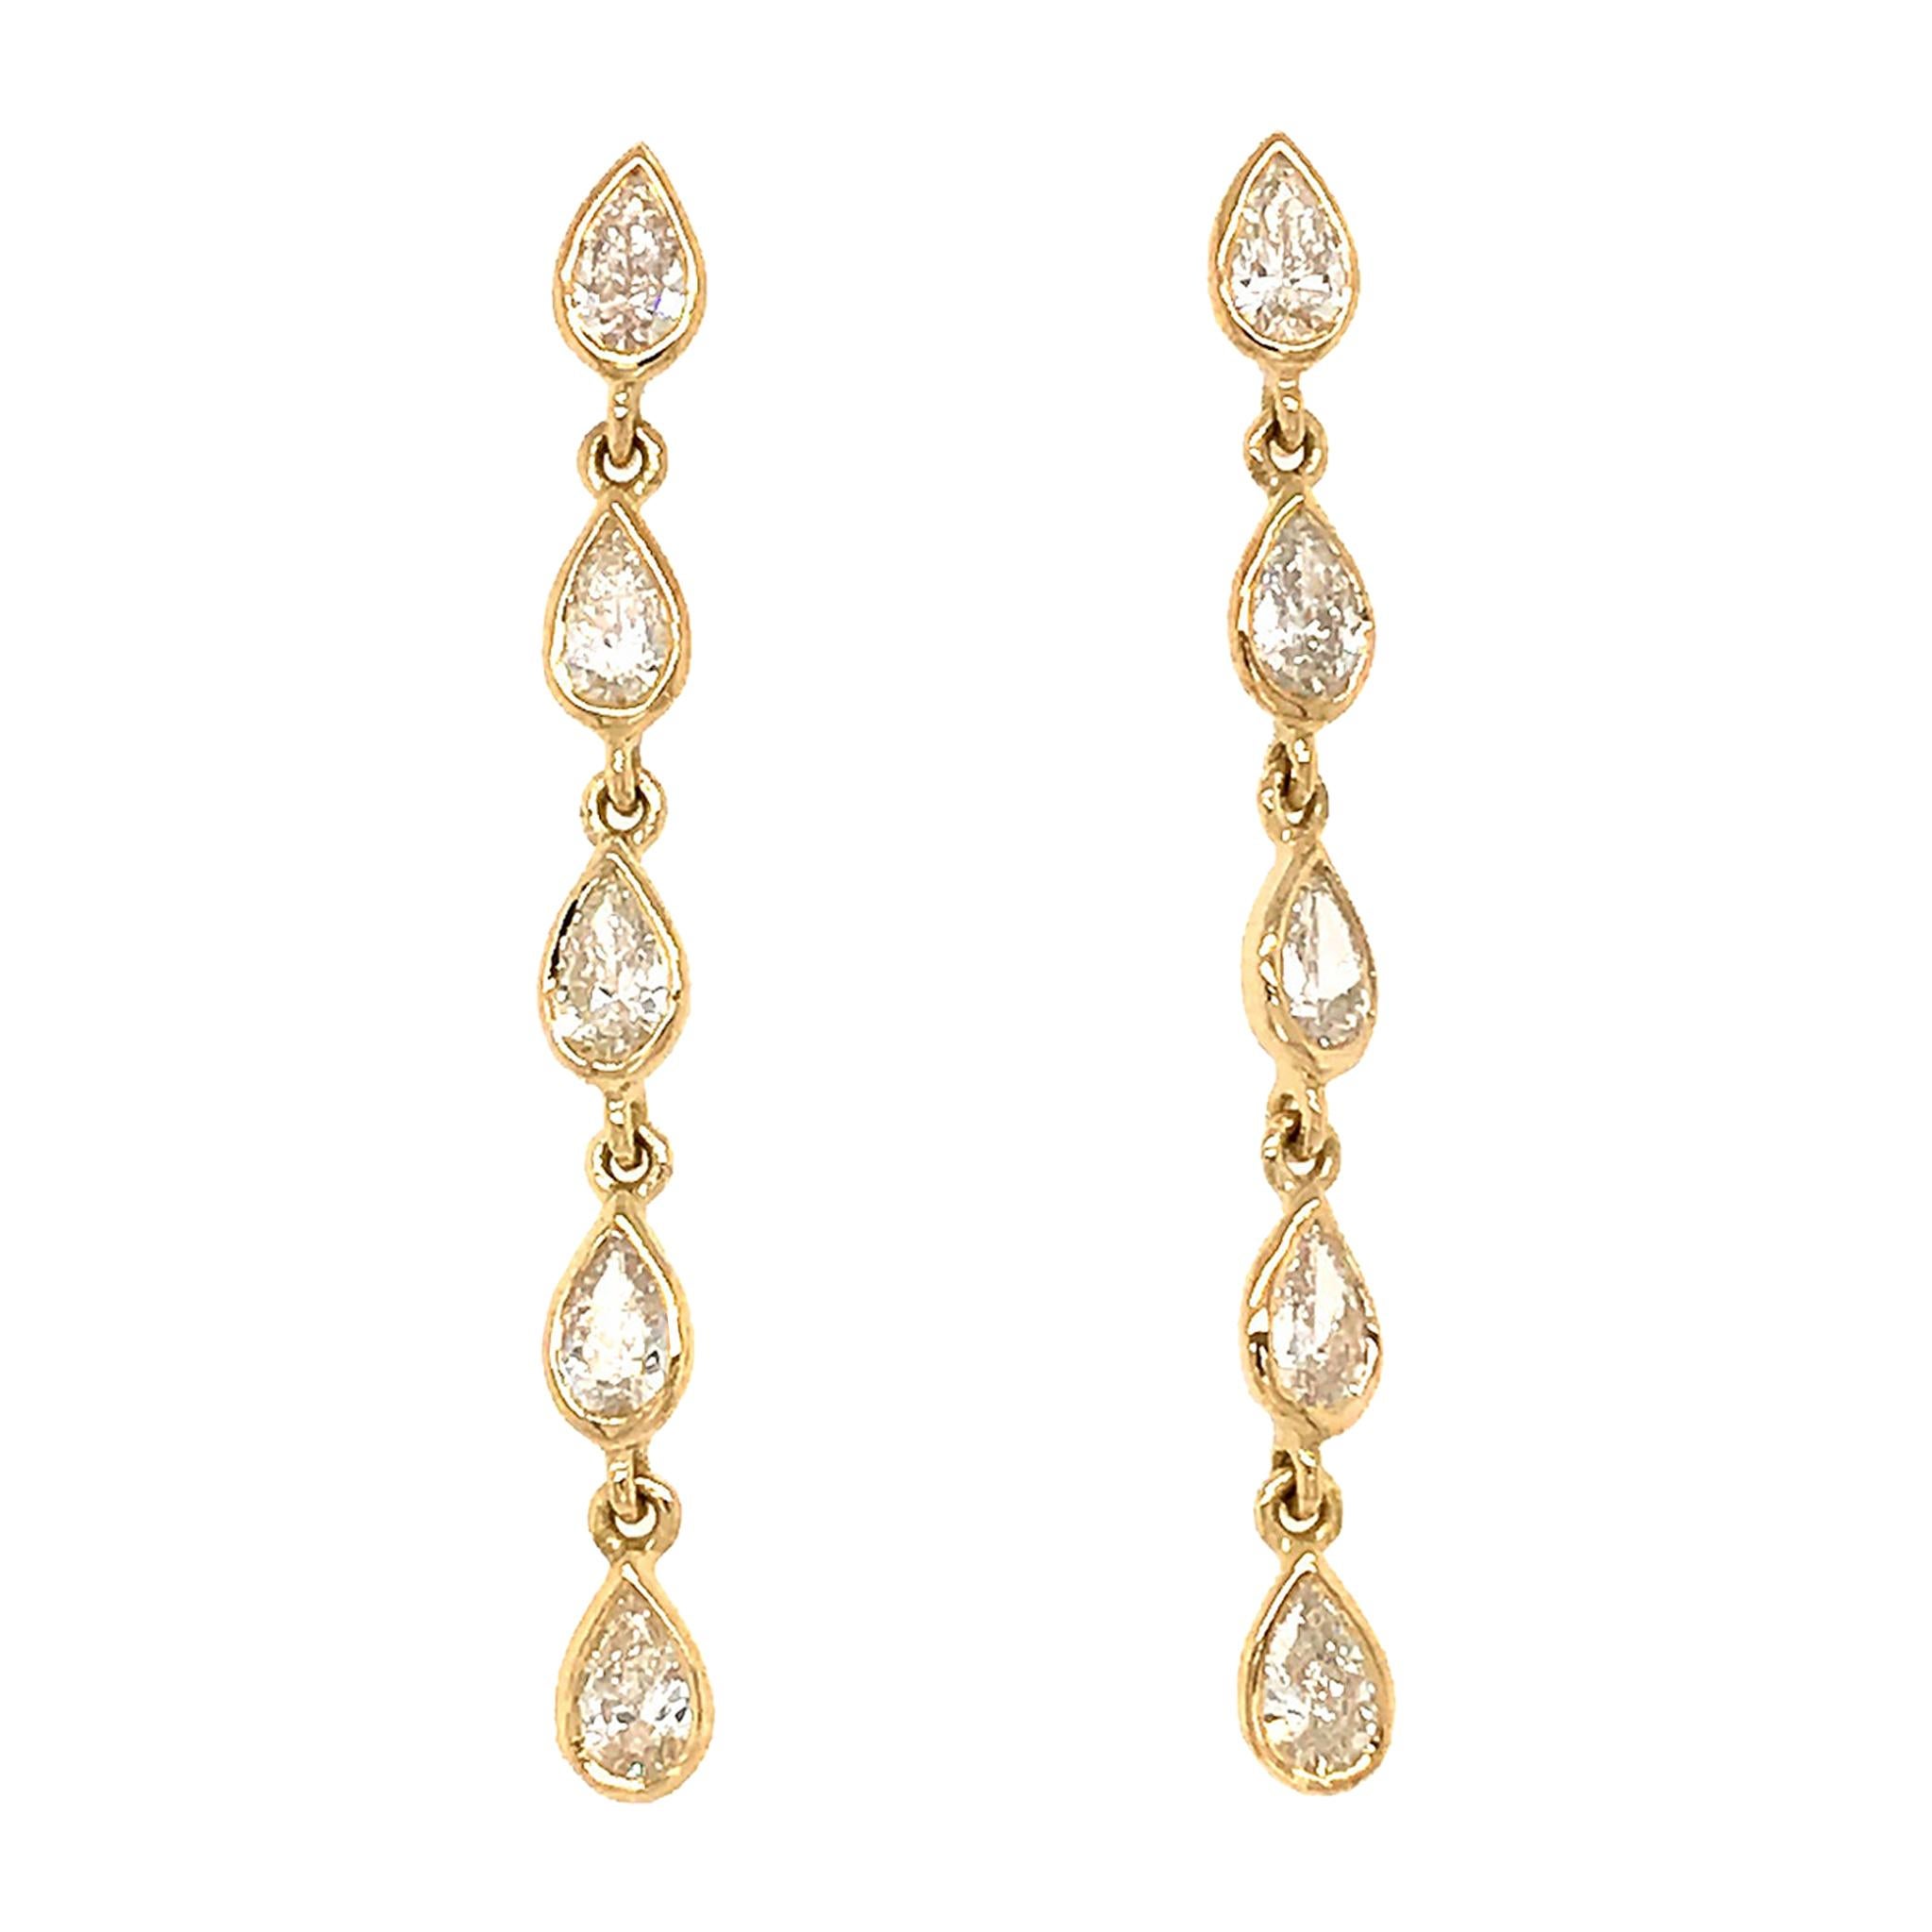 Fab Drops 18 Karat Yellow Gold Pear Shaped Drop Earrings For Sale